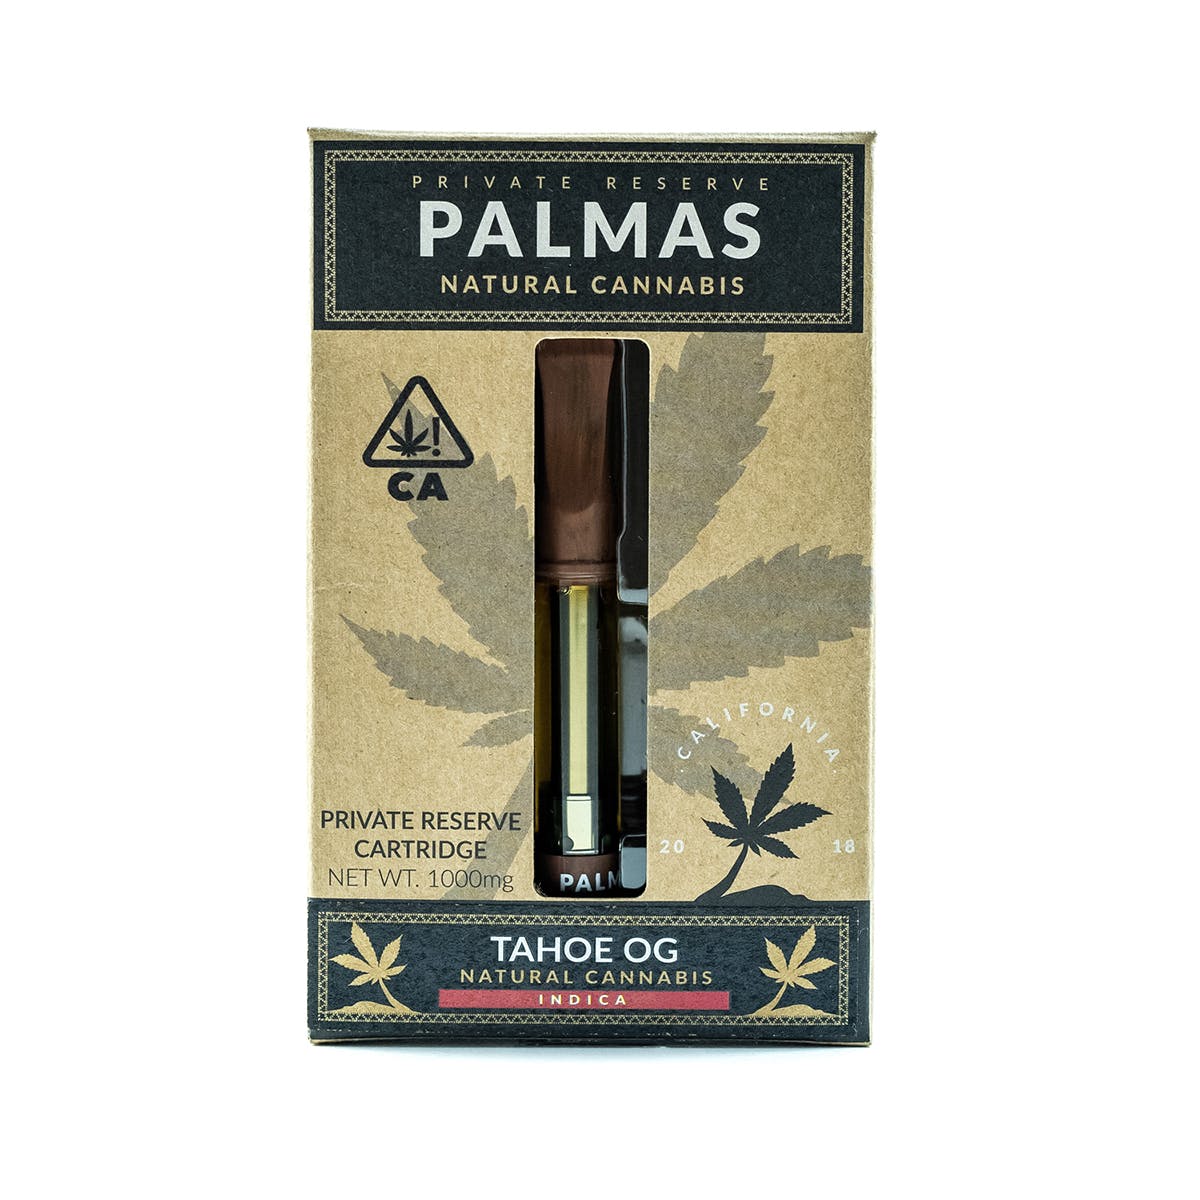 marijuana-dispensaries-straight-up-20-in-compton-palmas-private-reserve-cartridge-tahoe-og